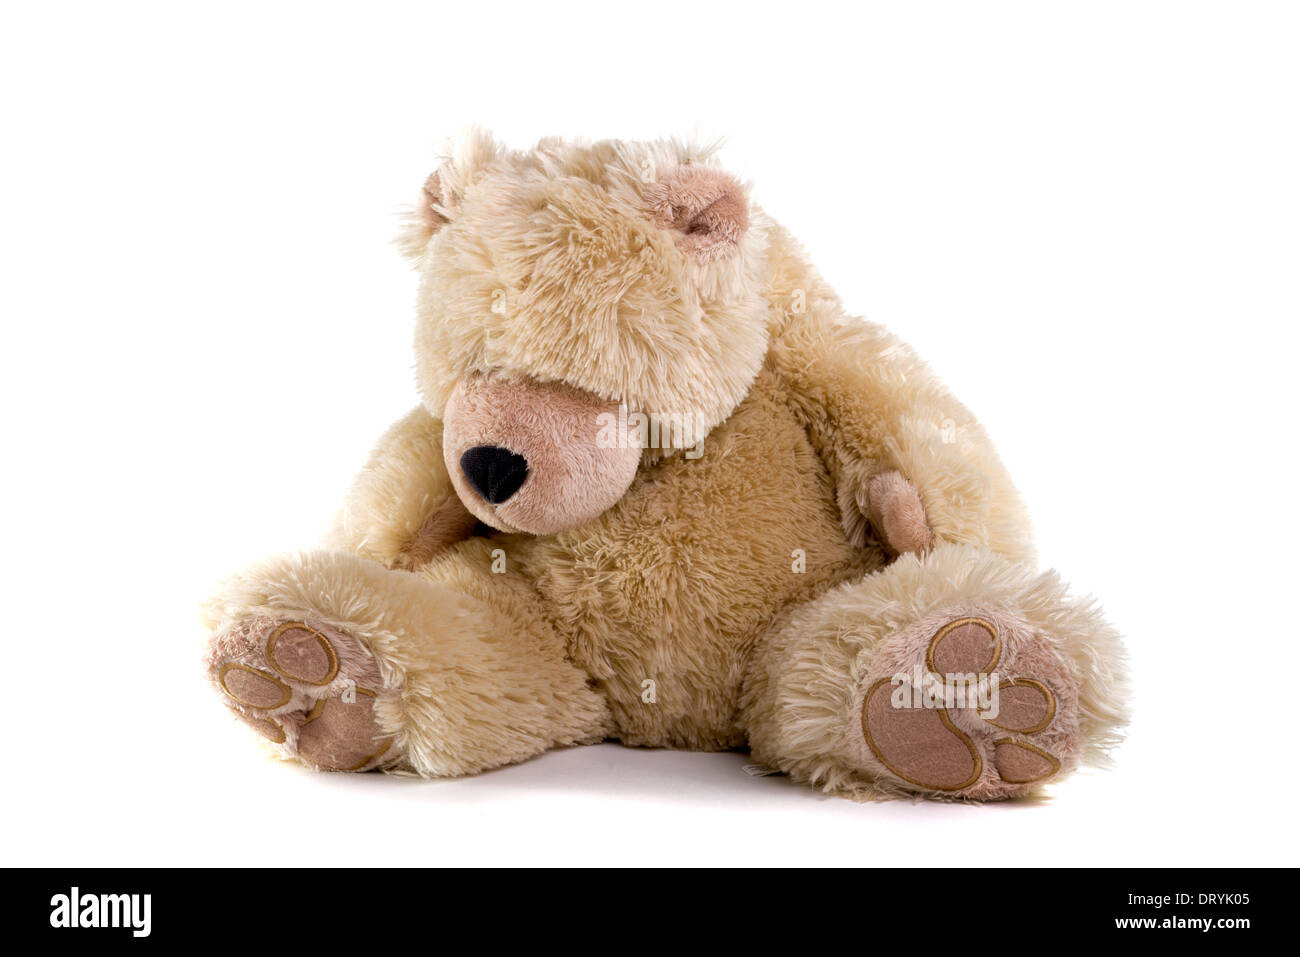 Sad teddy bear on white background Stock Photo